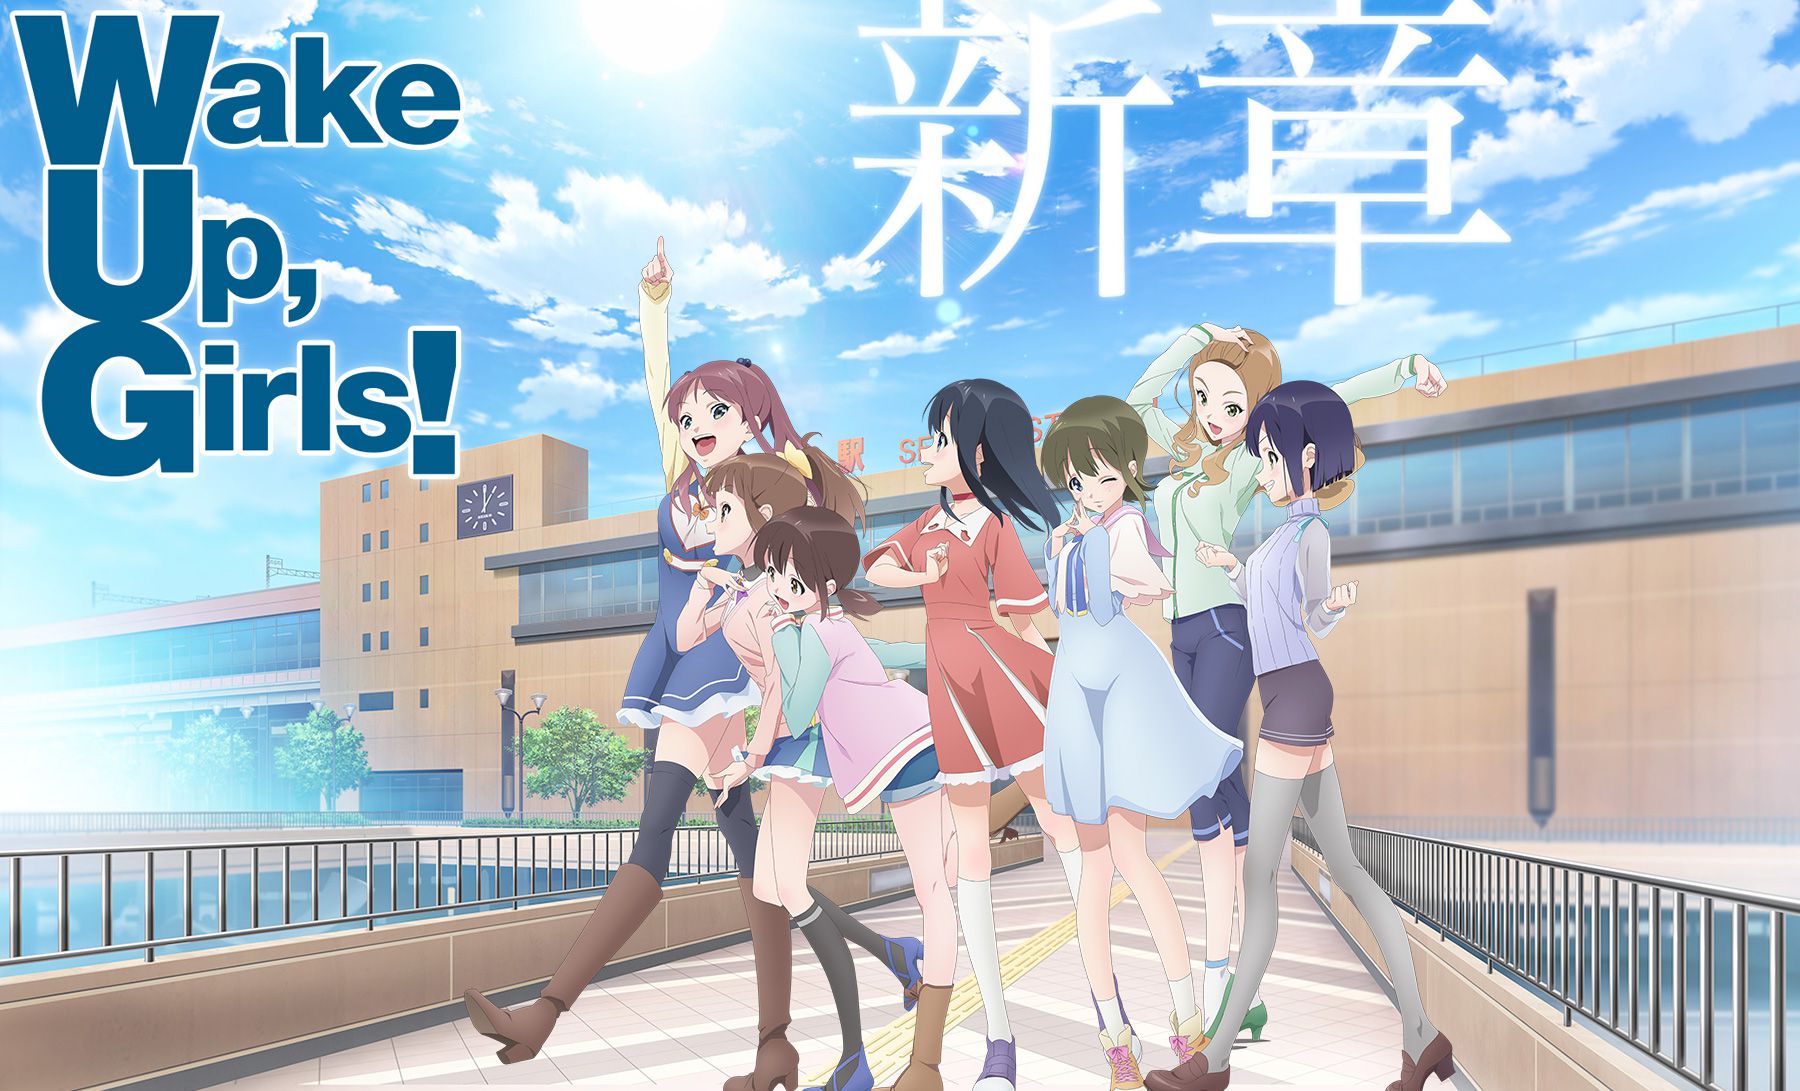 Wake Up Girls Shin Shou Tv Anime Announced For 2017 Otaku Tale